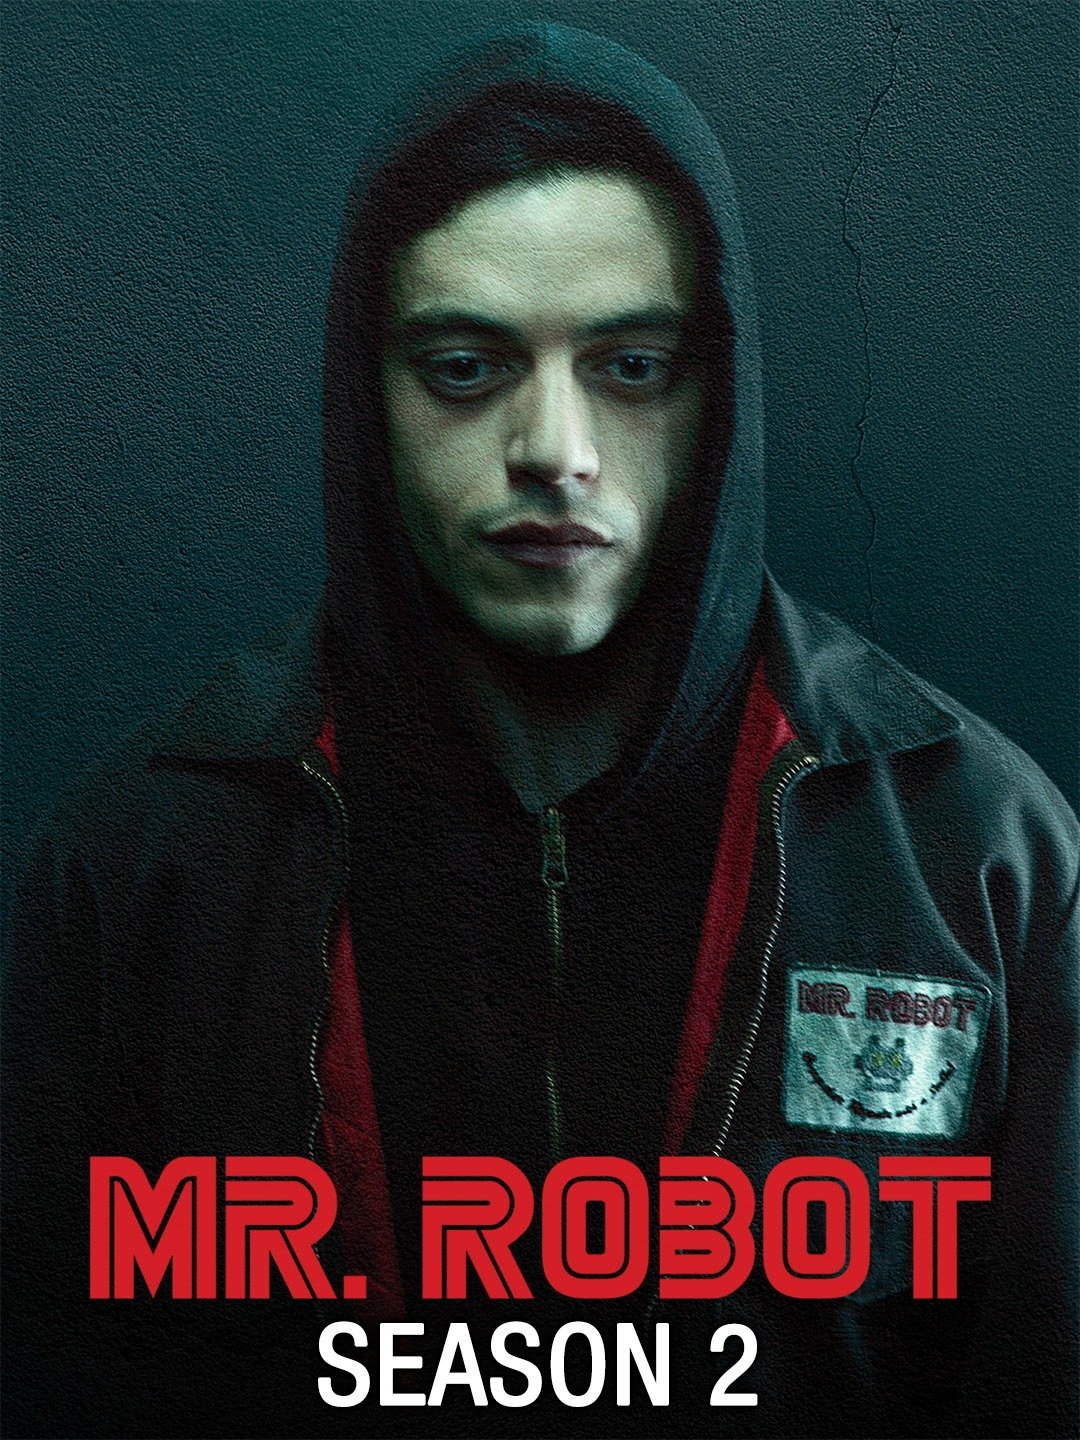 Robot mr Mr. Robot